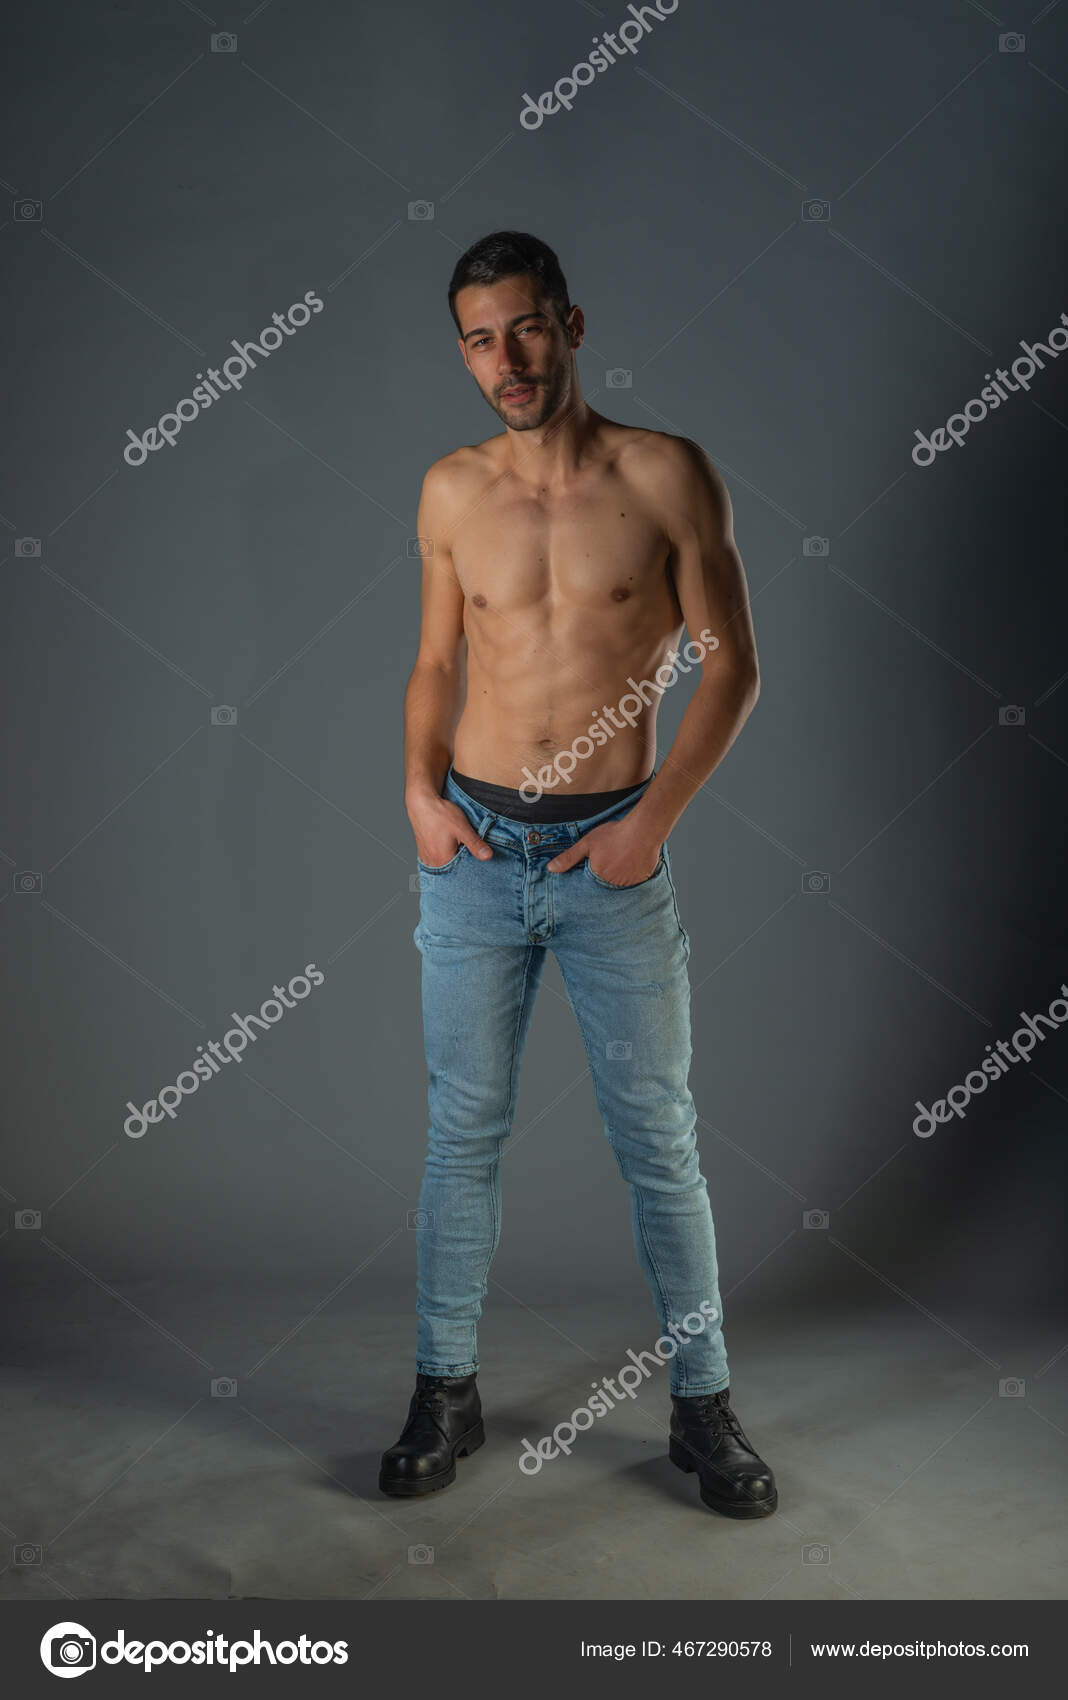 depositphotos 467290578 stock photo full body portrait sports man